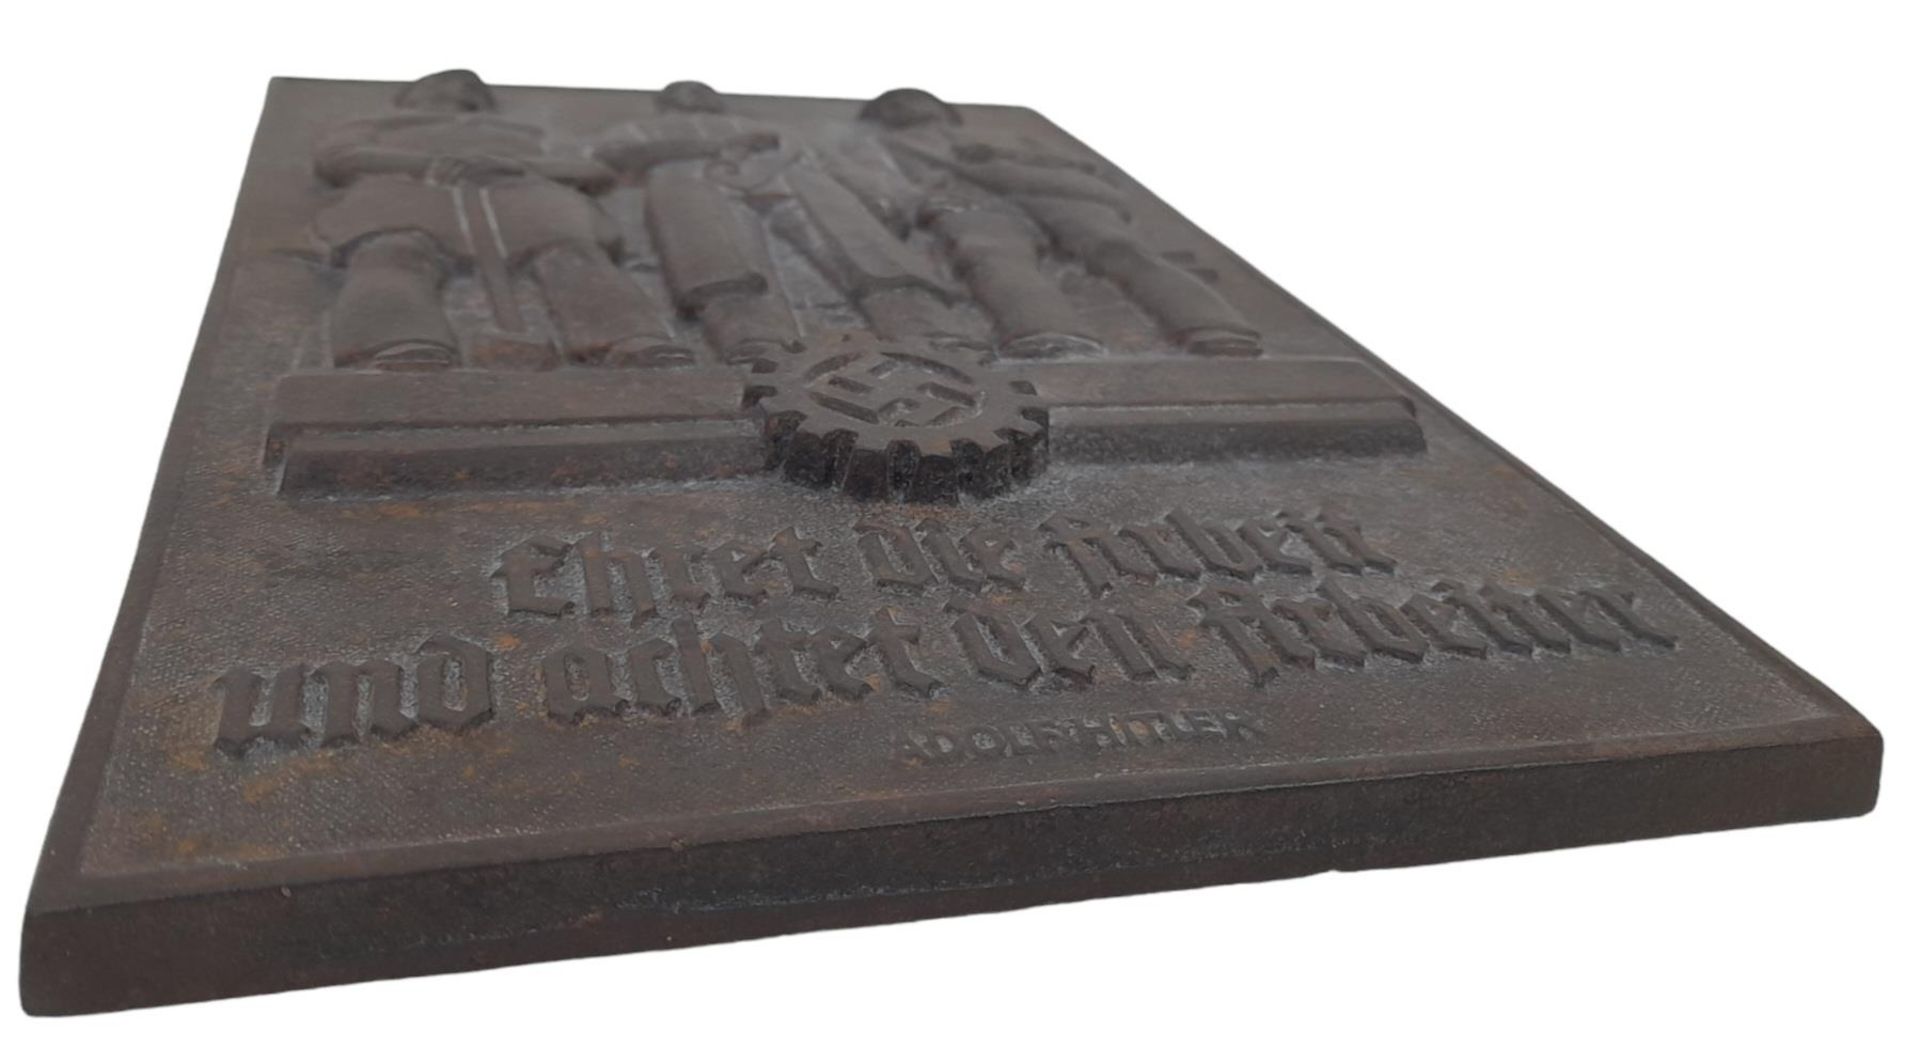 3rd Reich Deutsche Arbeitsfront (Labour Force) Cast Iron Plaque. “Adolf Hitler Respects the Labour - Image 4 of 4